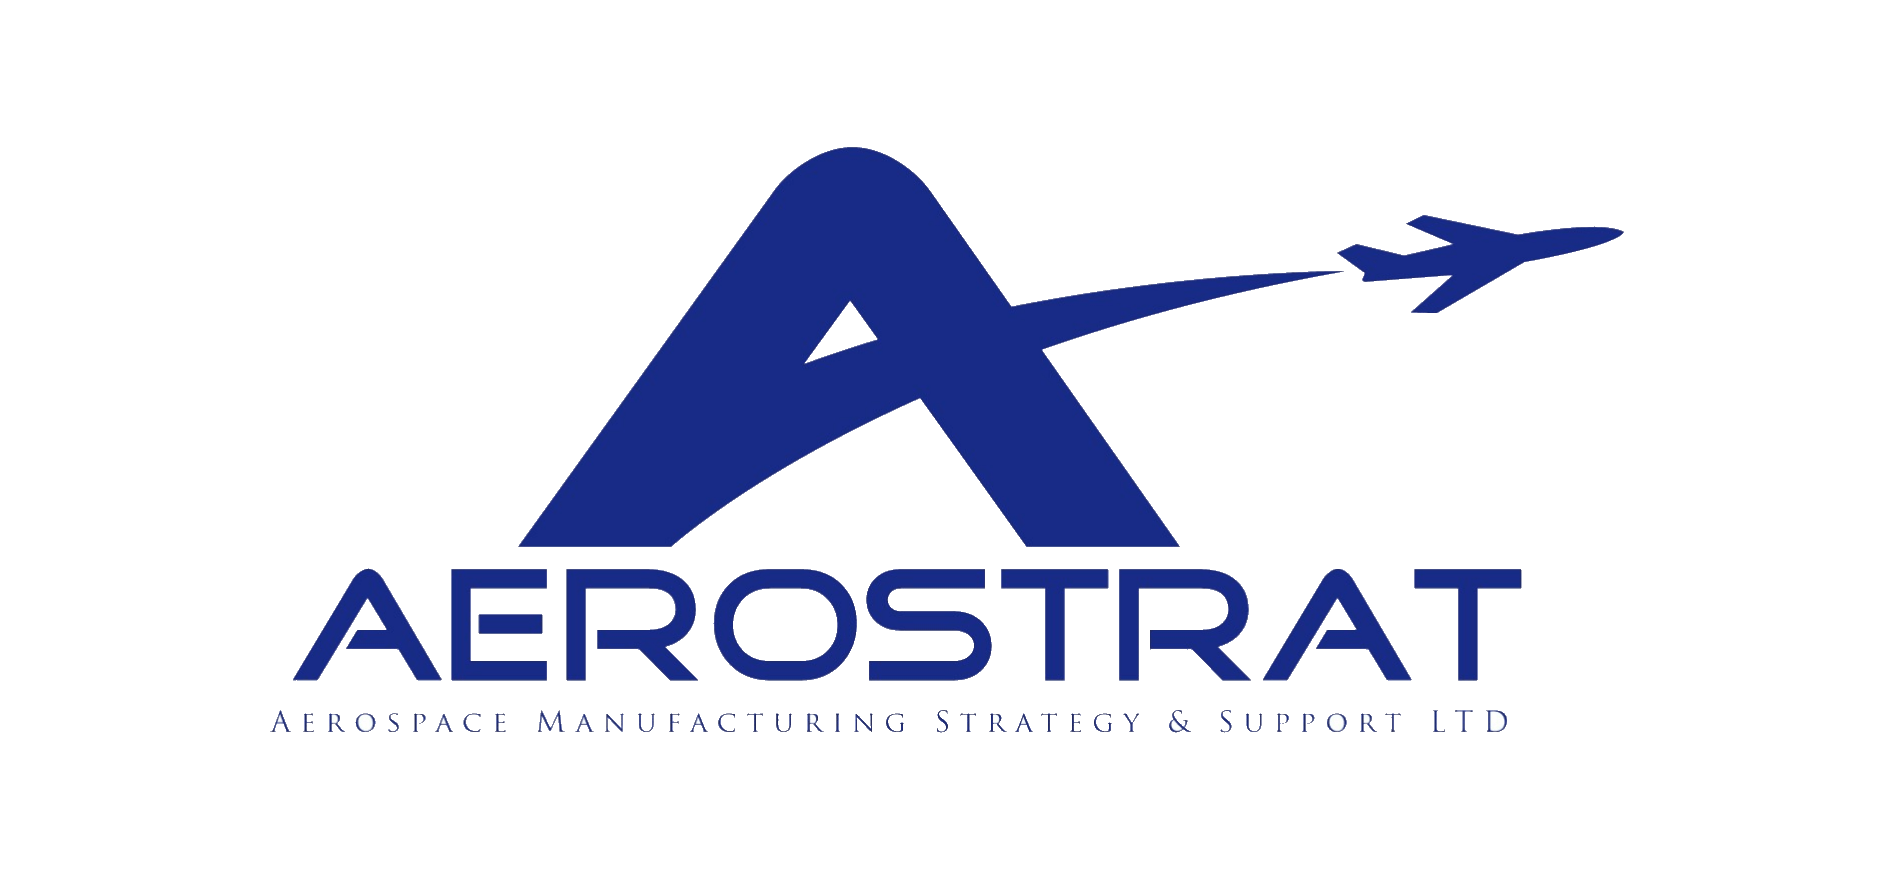 Aerospace Company Logo - Midlands Aerospace Alliance - Aerospace Manufacturing Strategy ...